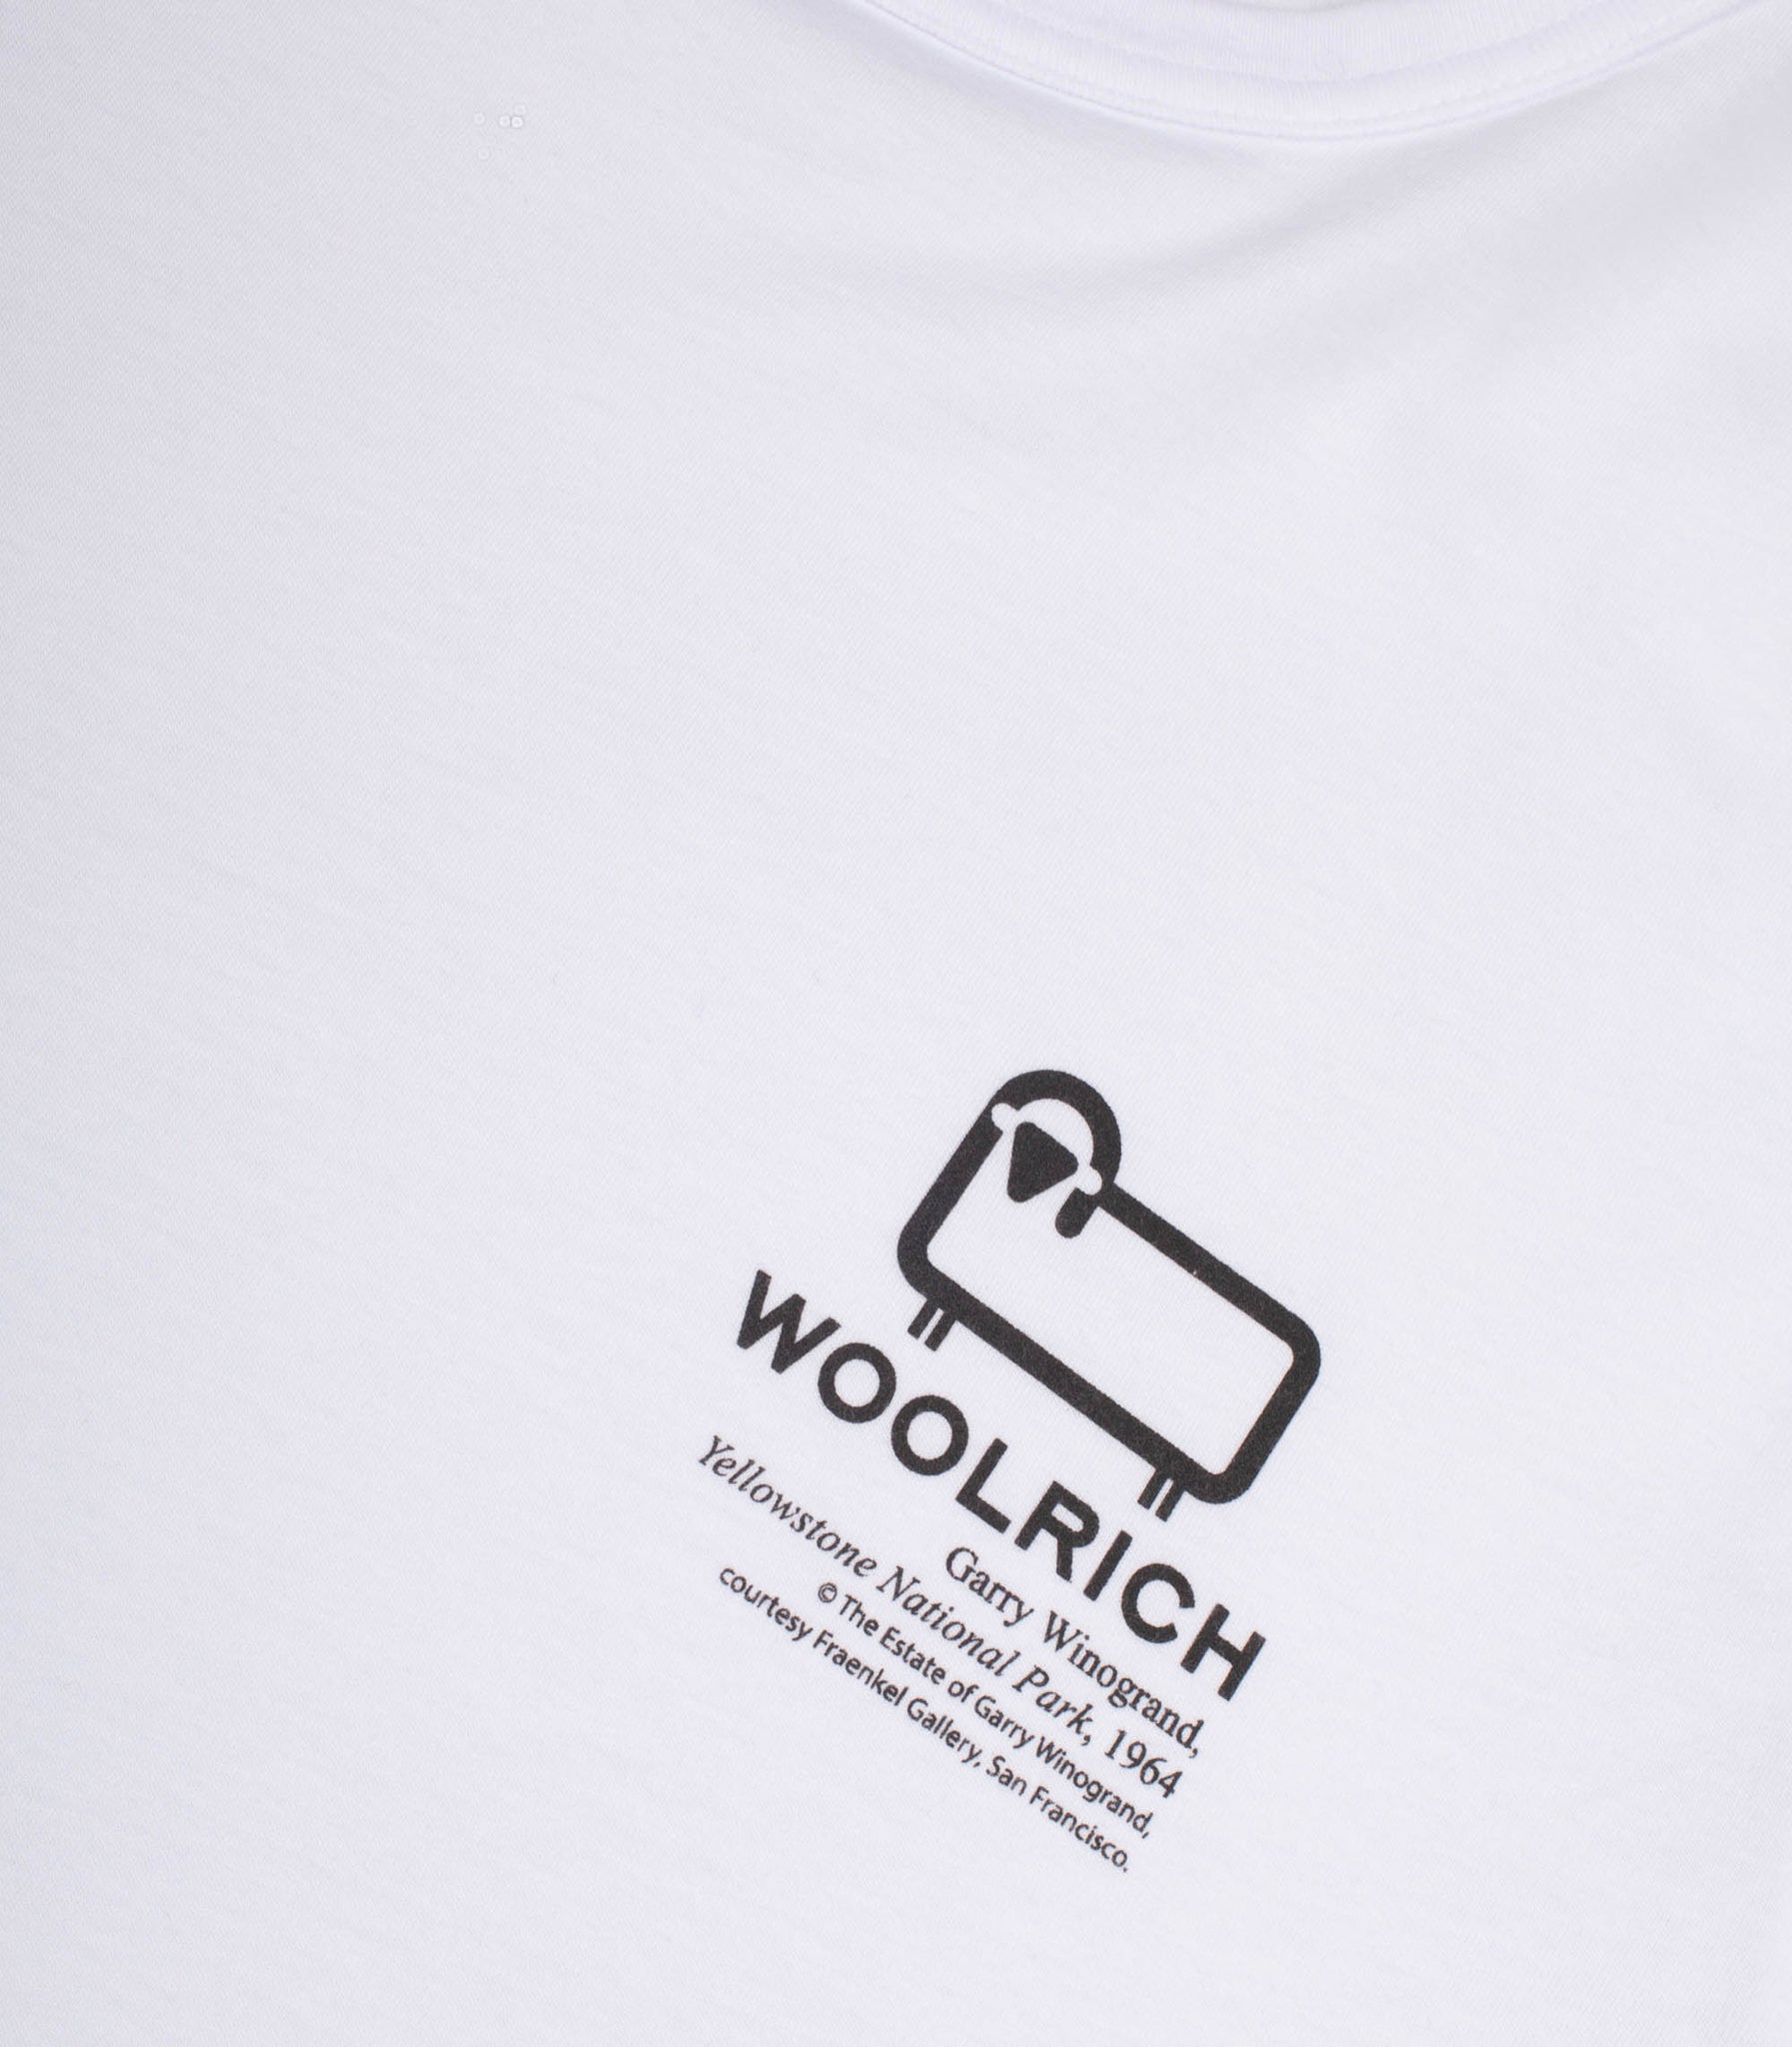 Woolrich Photographic Tee White Man T-Shirt